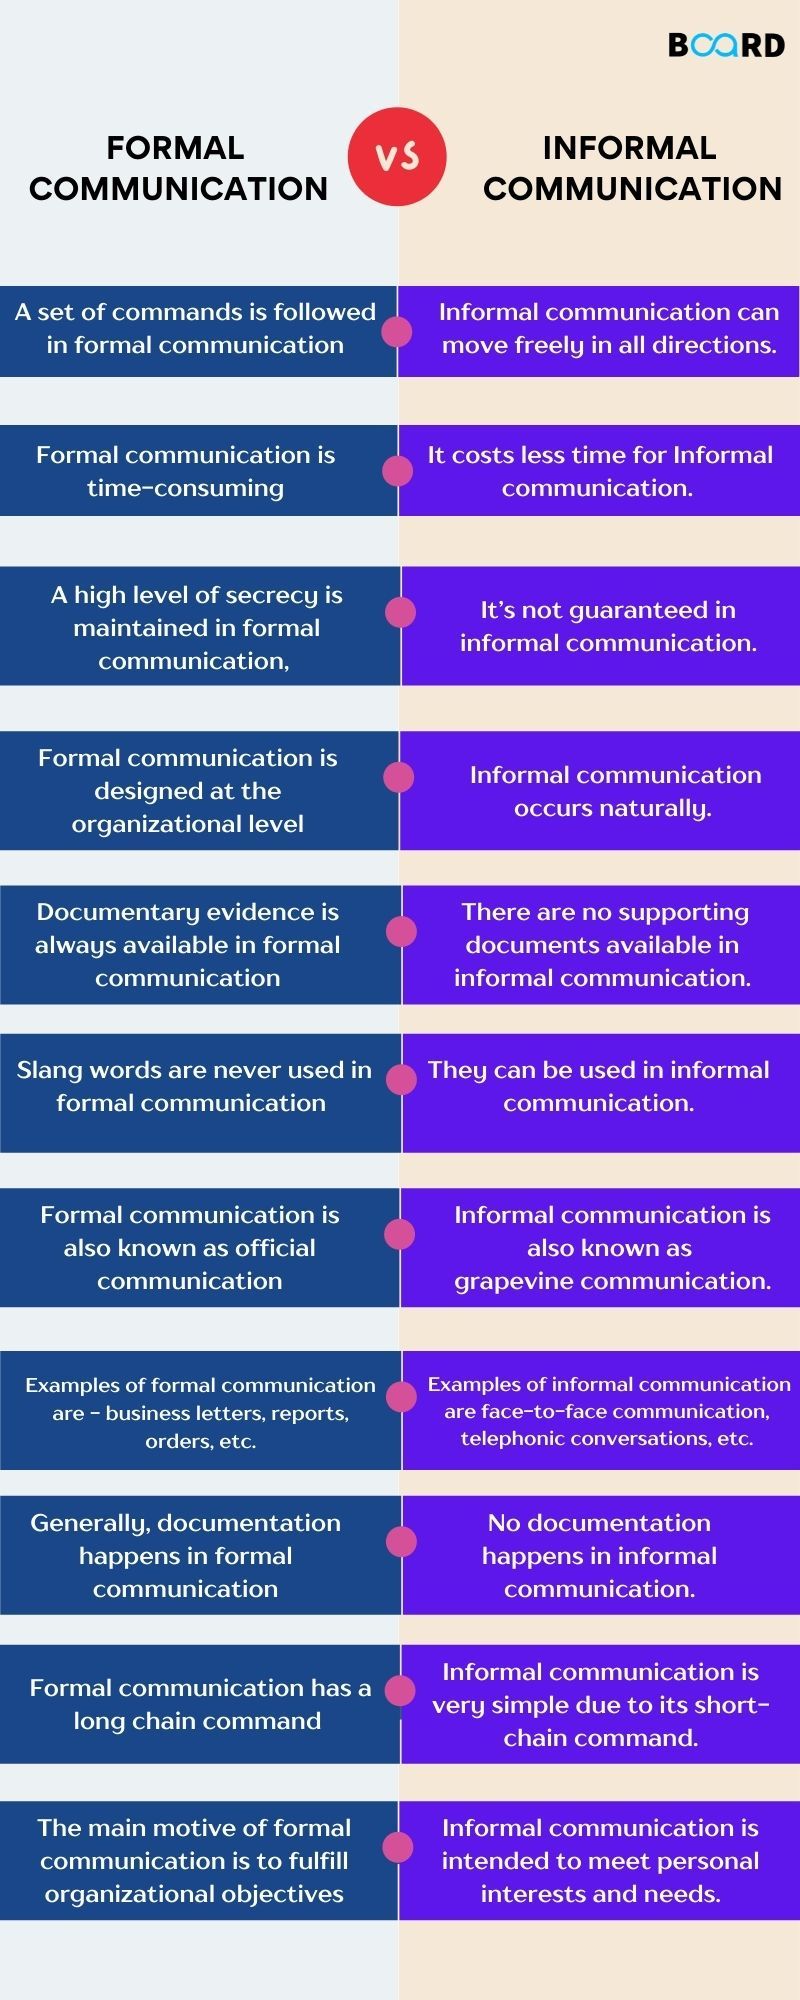 presentation on formal and informal communication